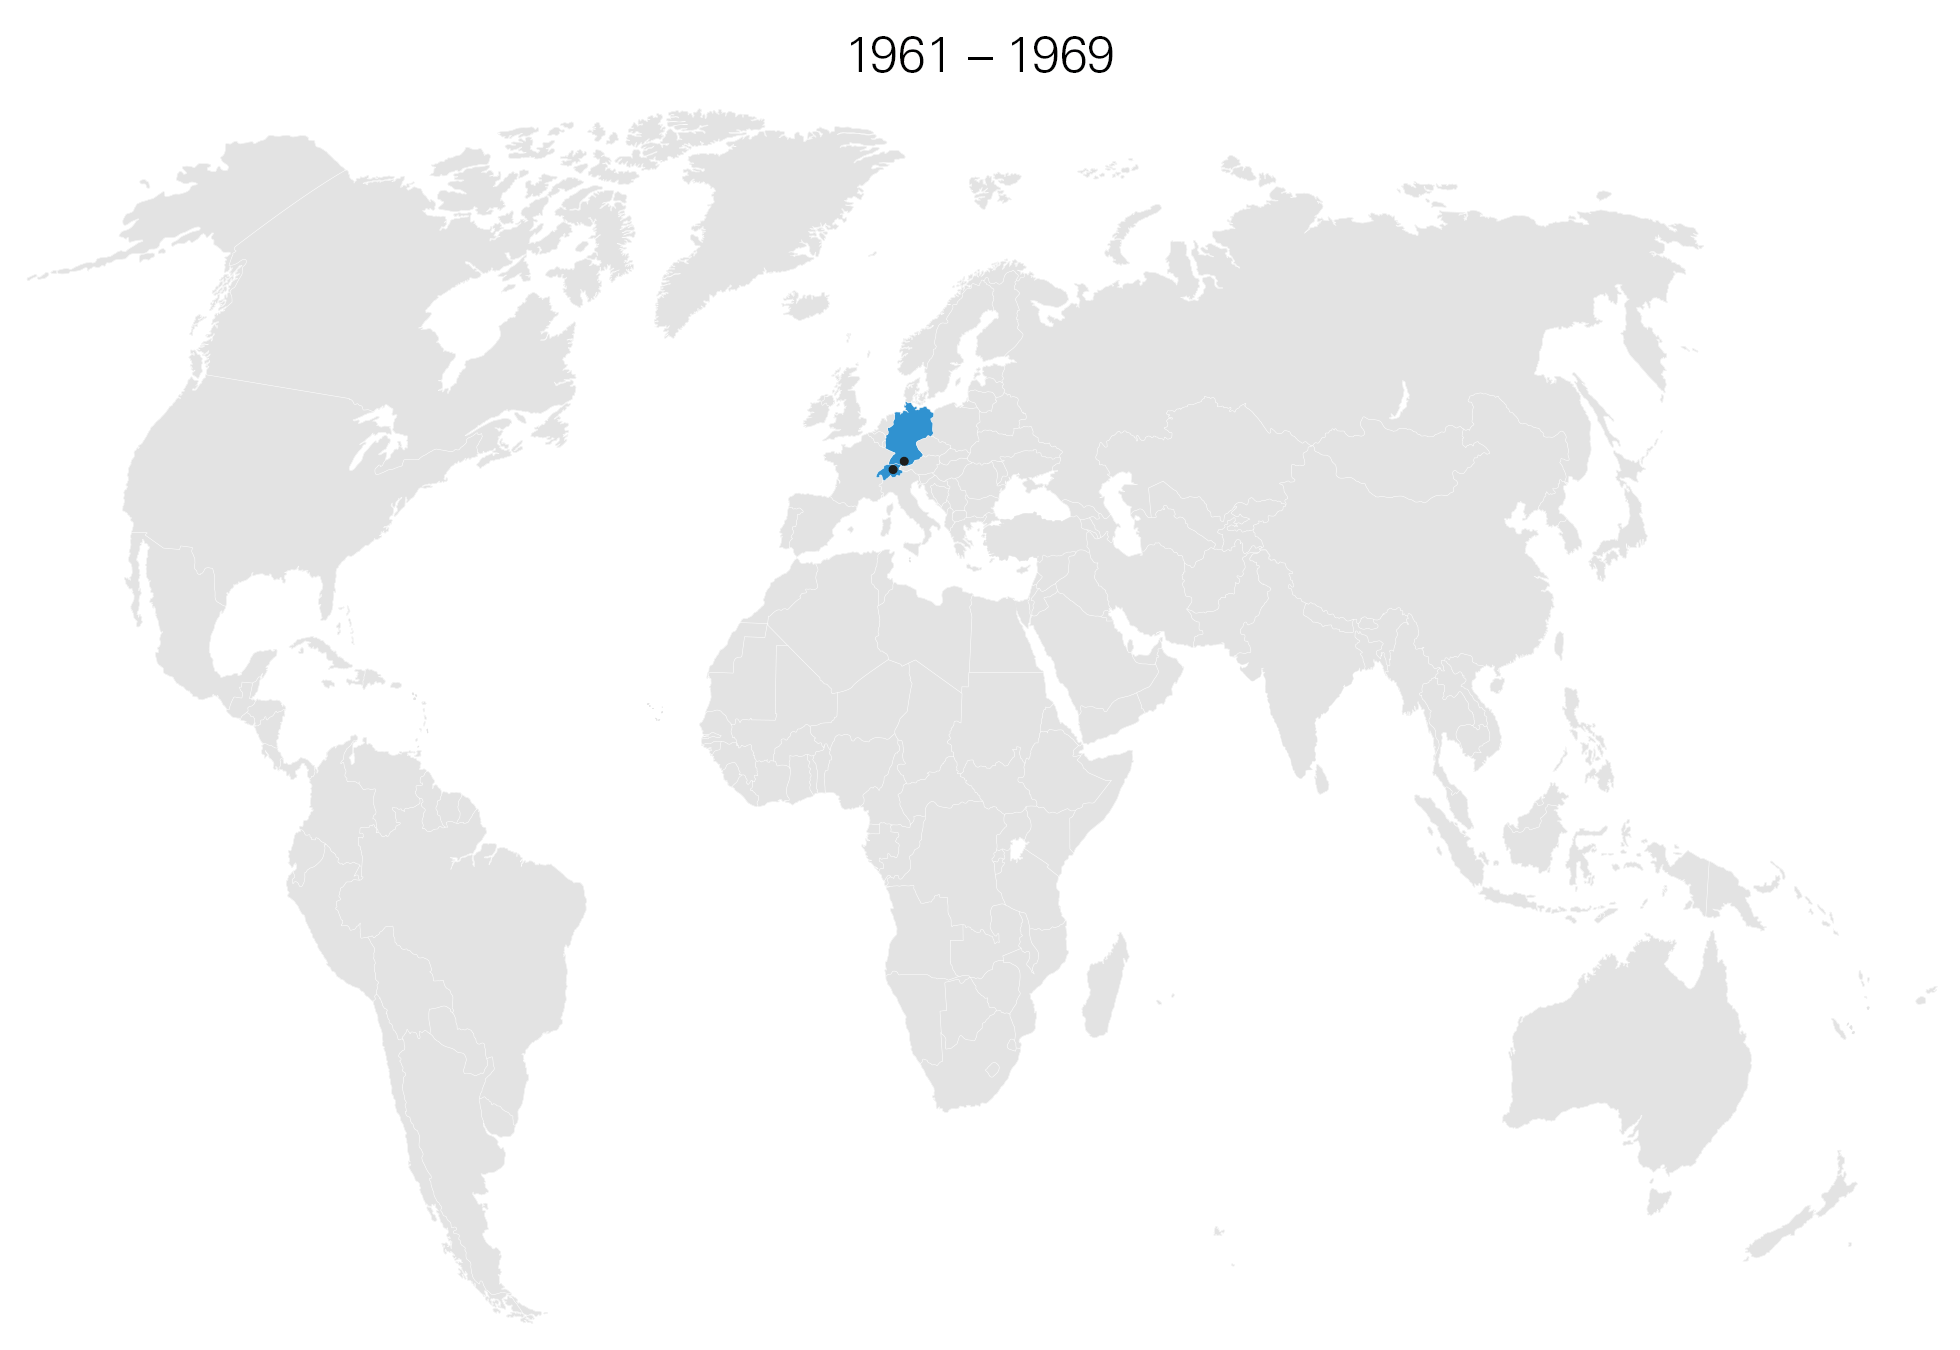 MULTIVAC_Worldmap_1961-1969